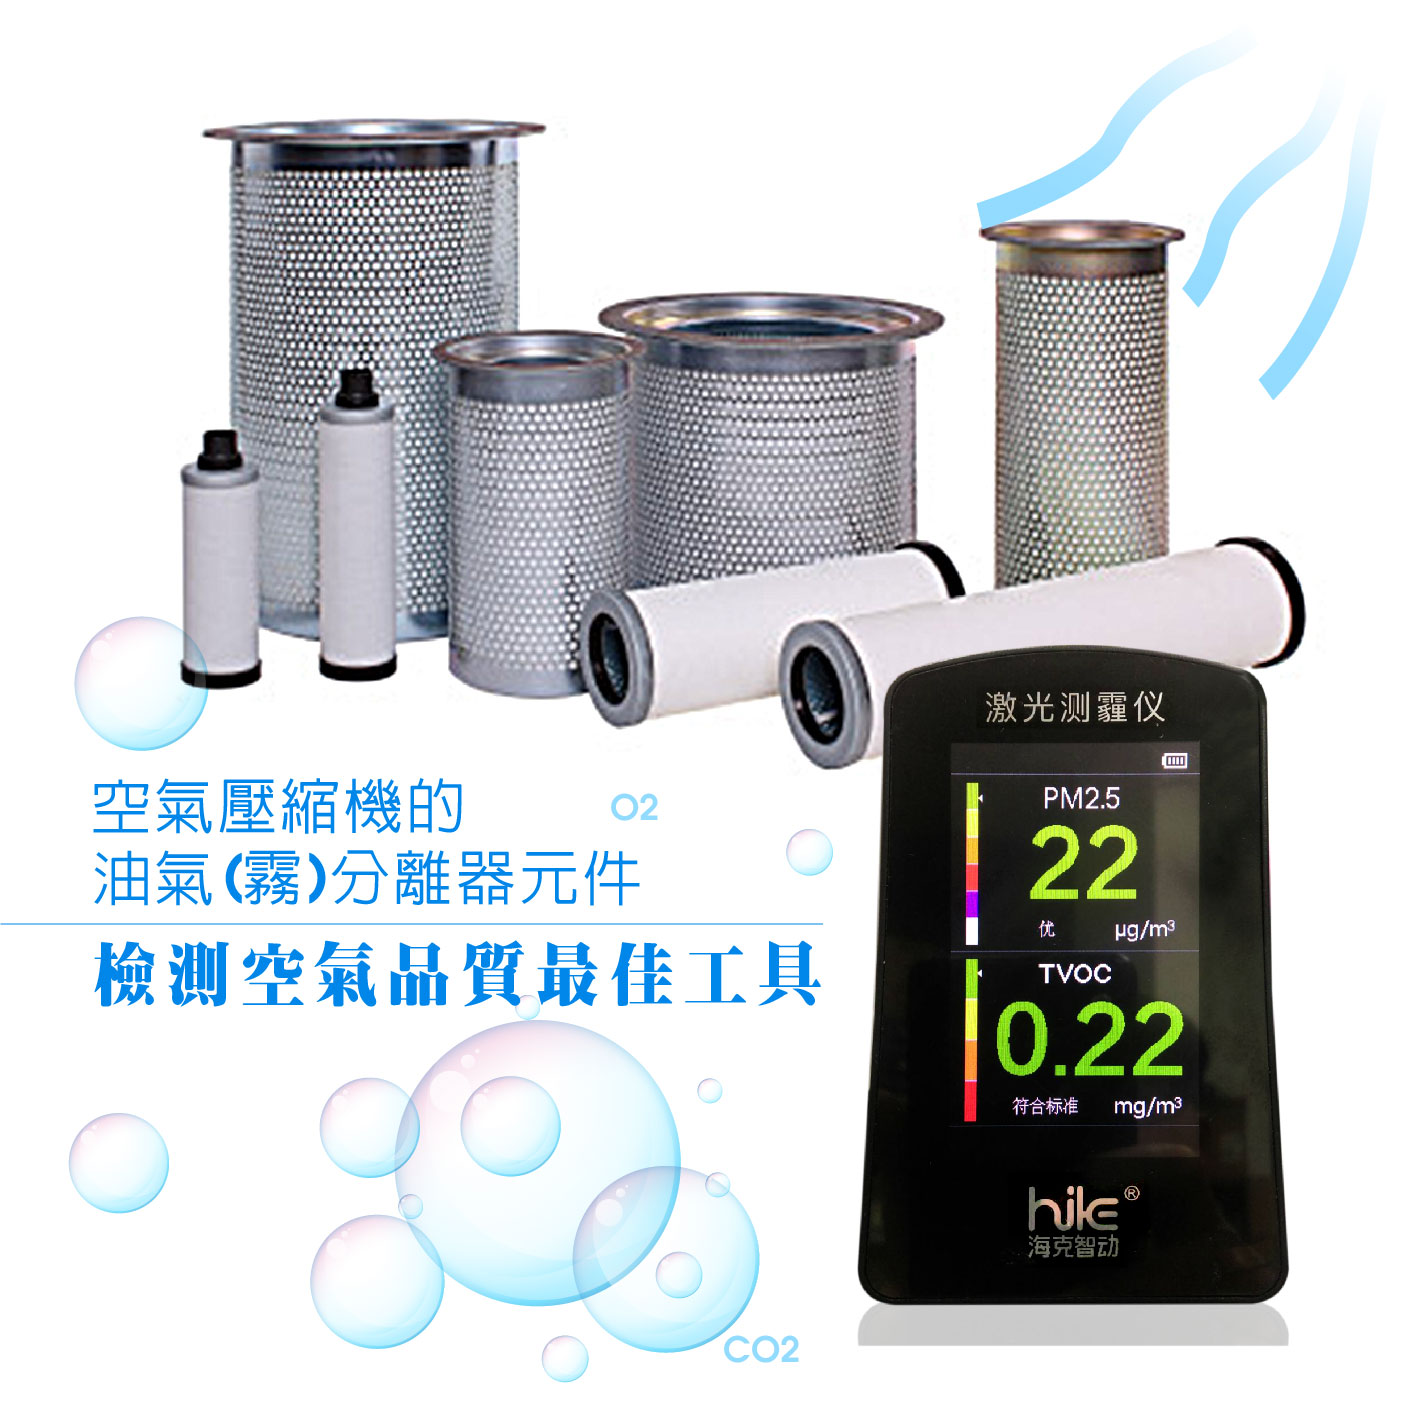 PM2.5檢測儀